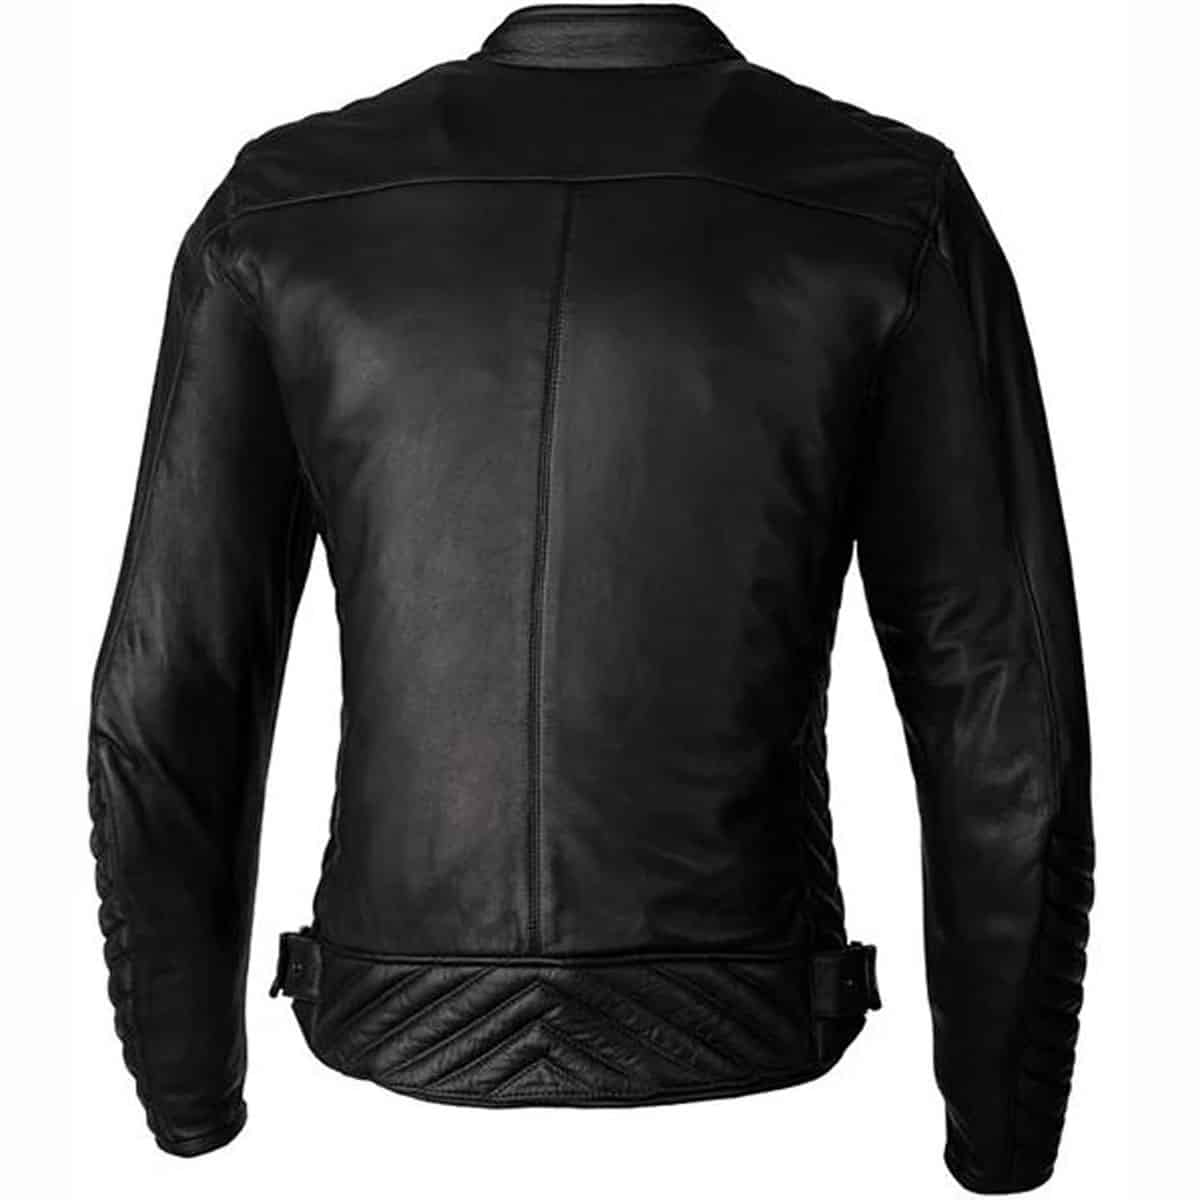 RST Roadster 3 leather motorcycle jacket back